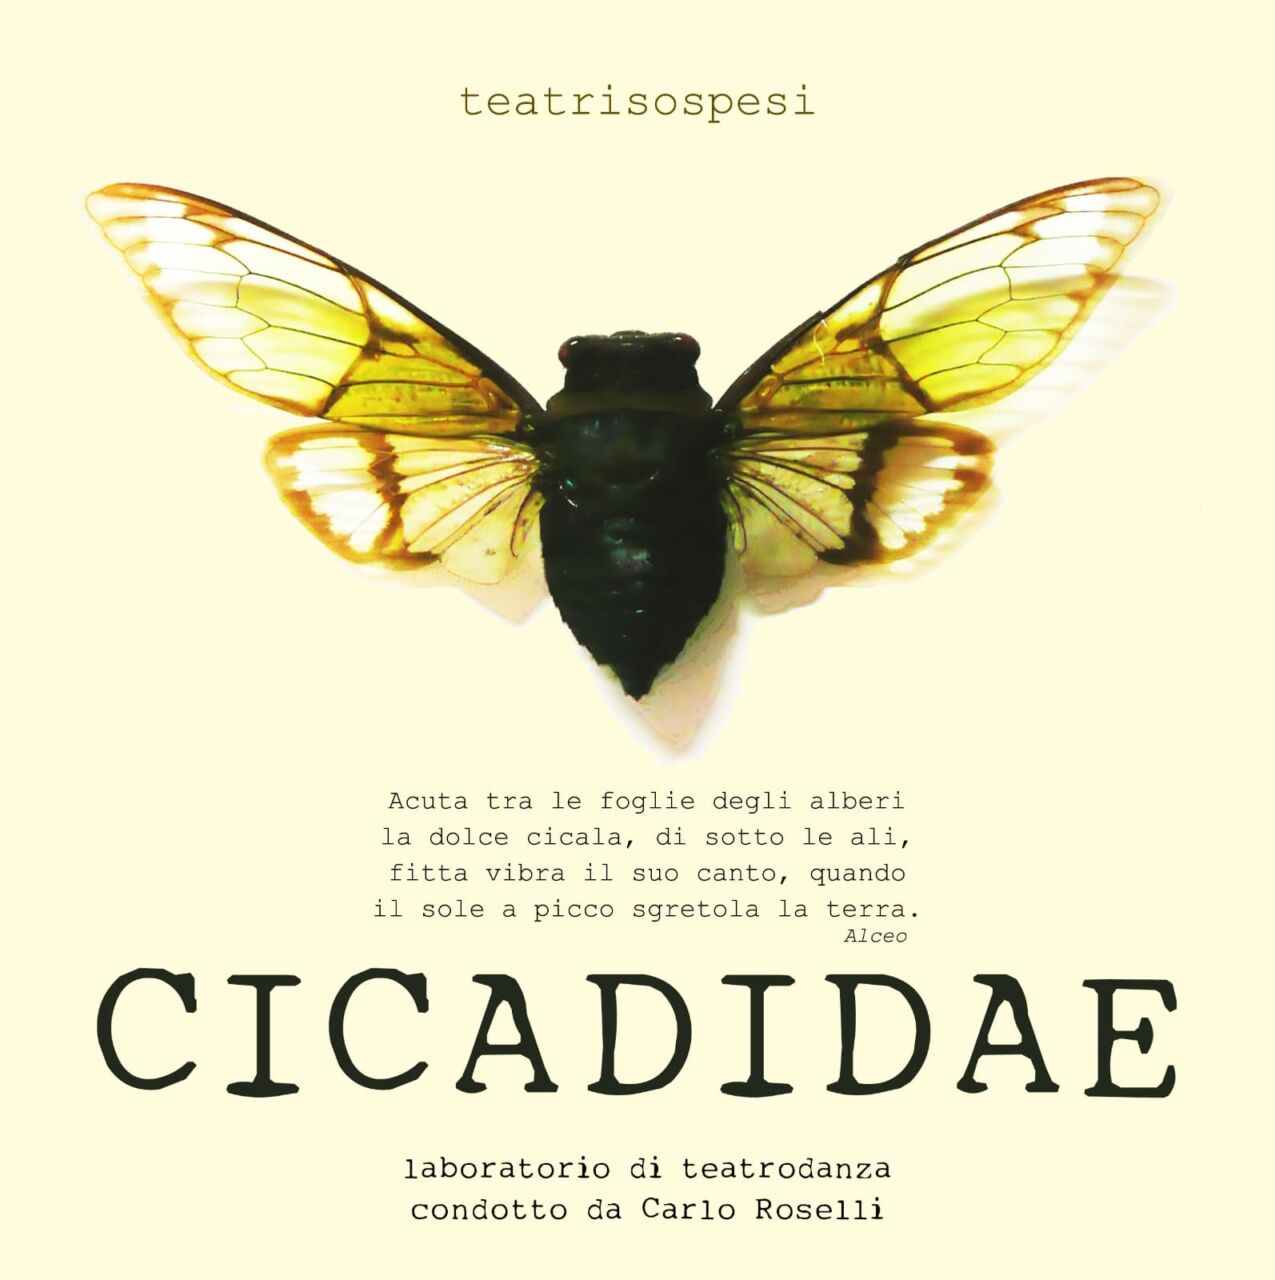 cicadidae